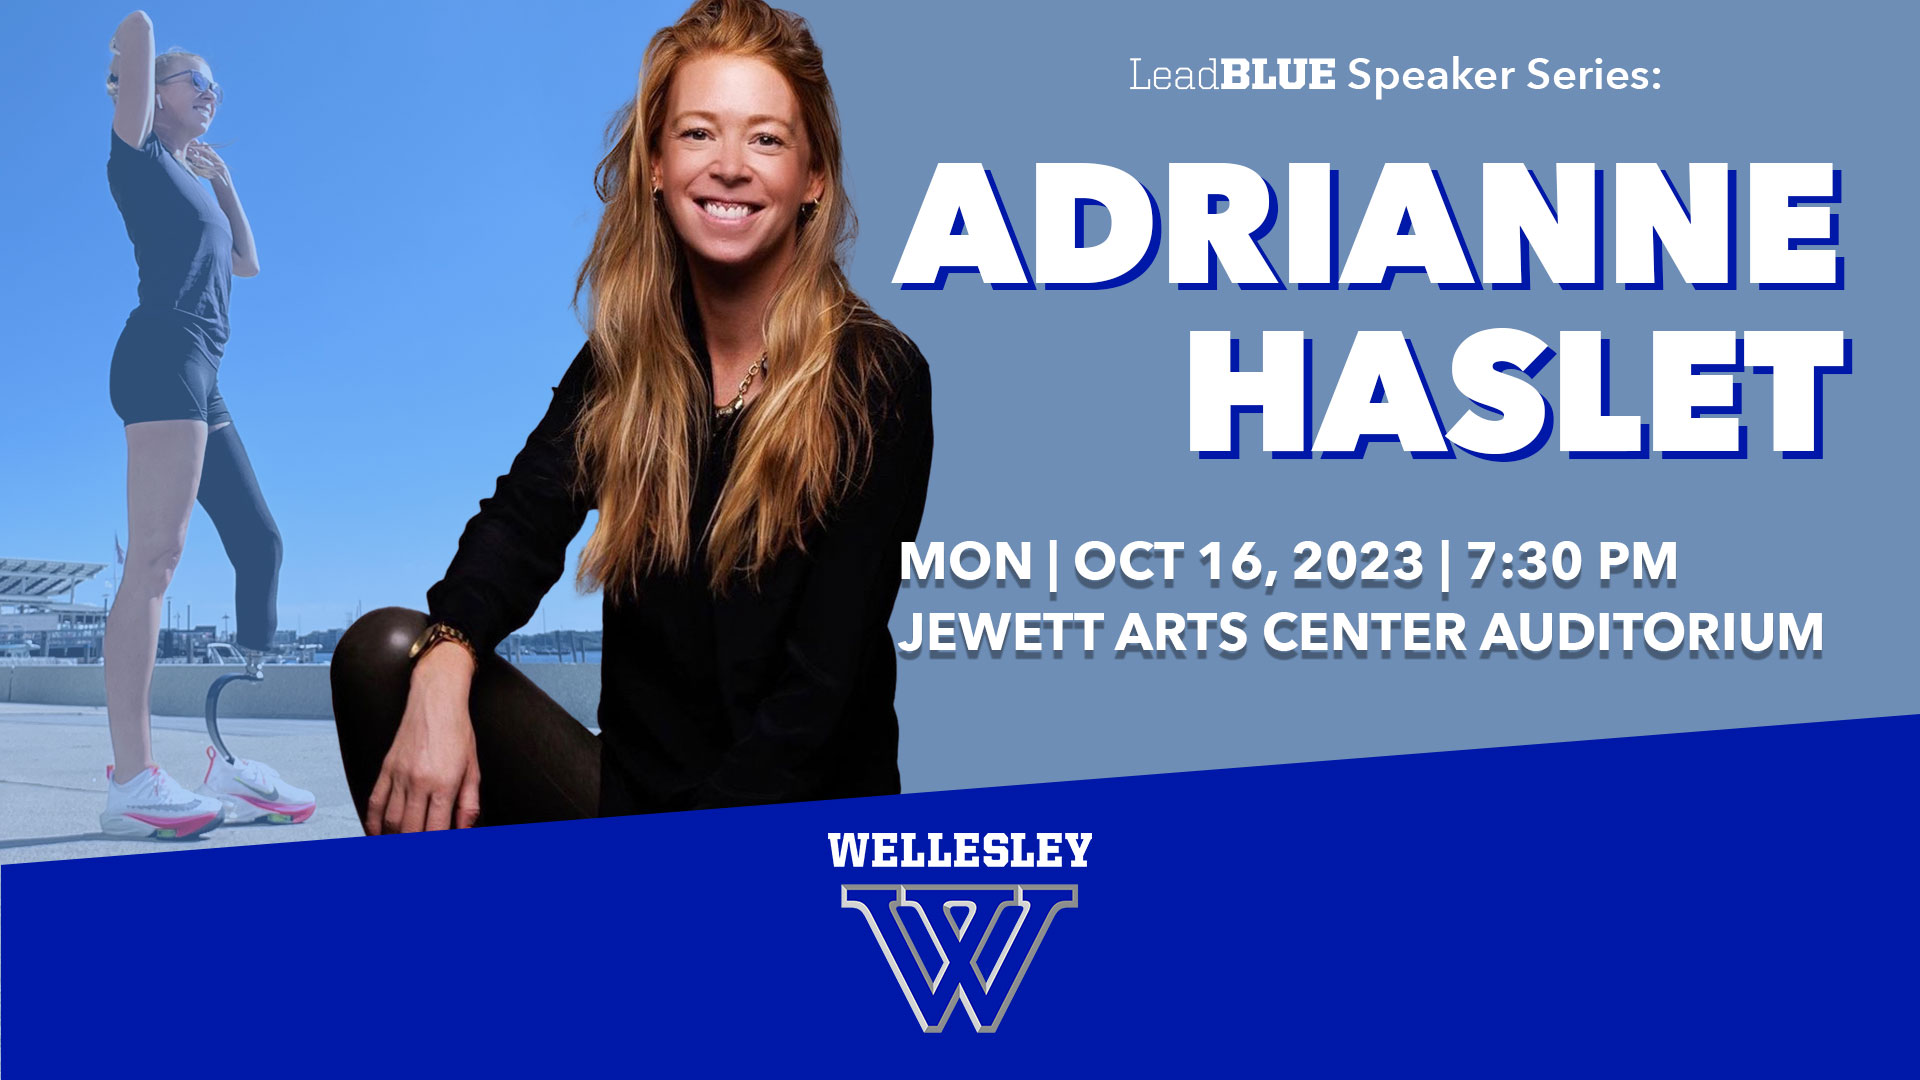 LeadBLUE: Wellesley Athletics Welcomes Adrianne Haslet on October 16, 2023